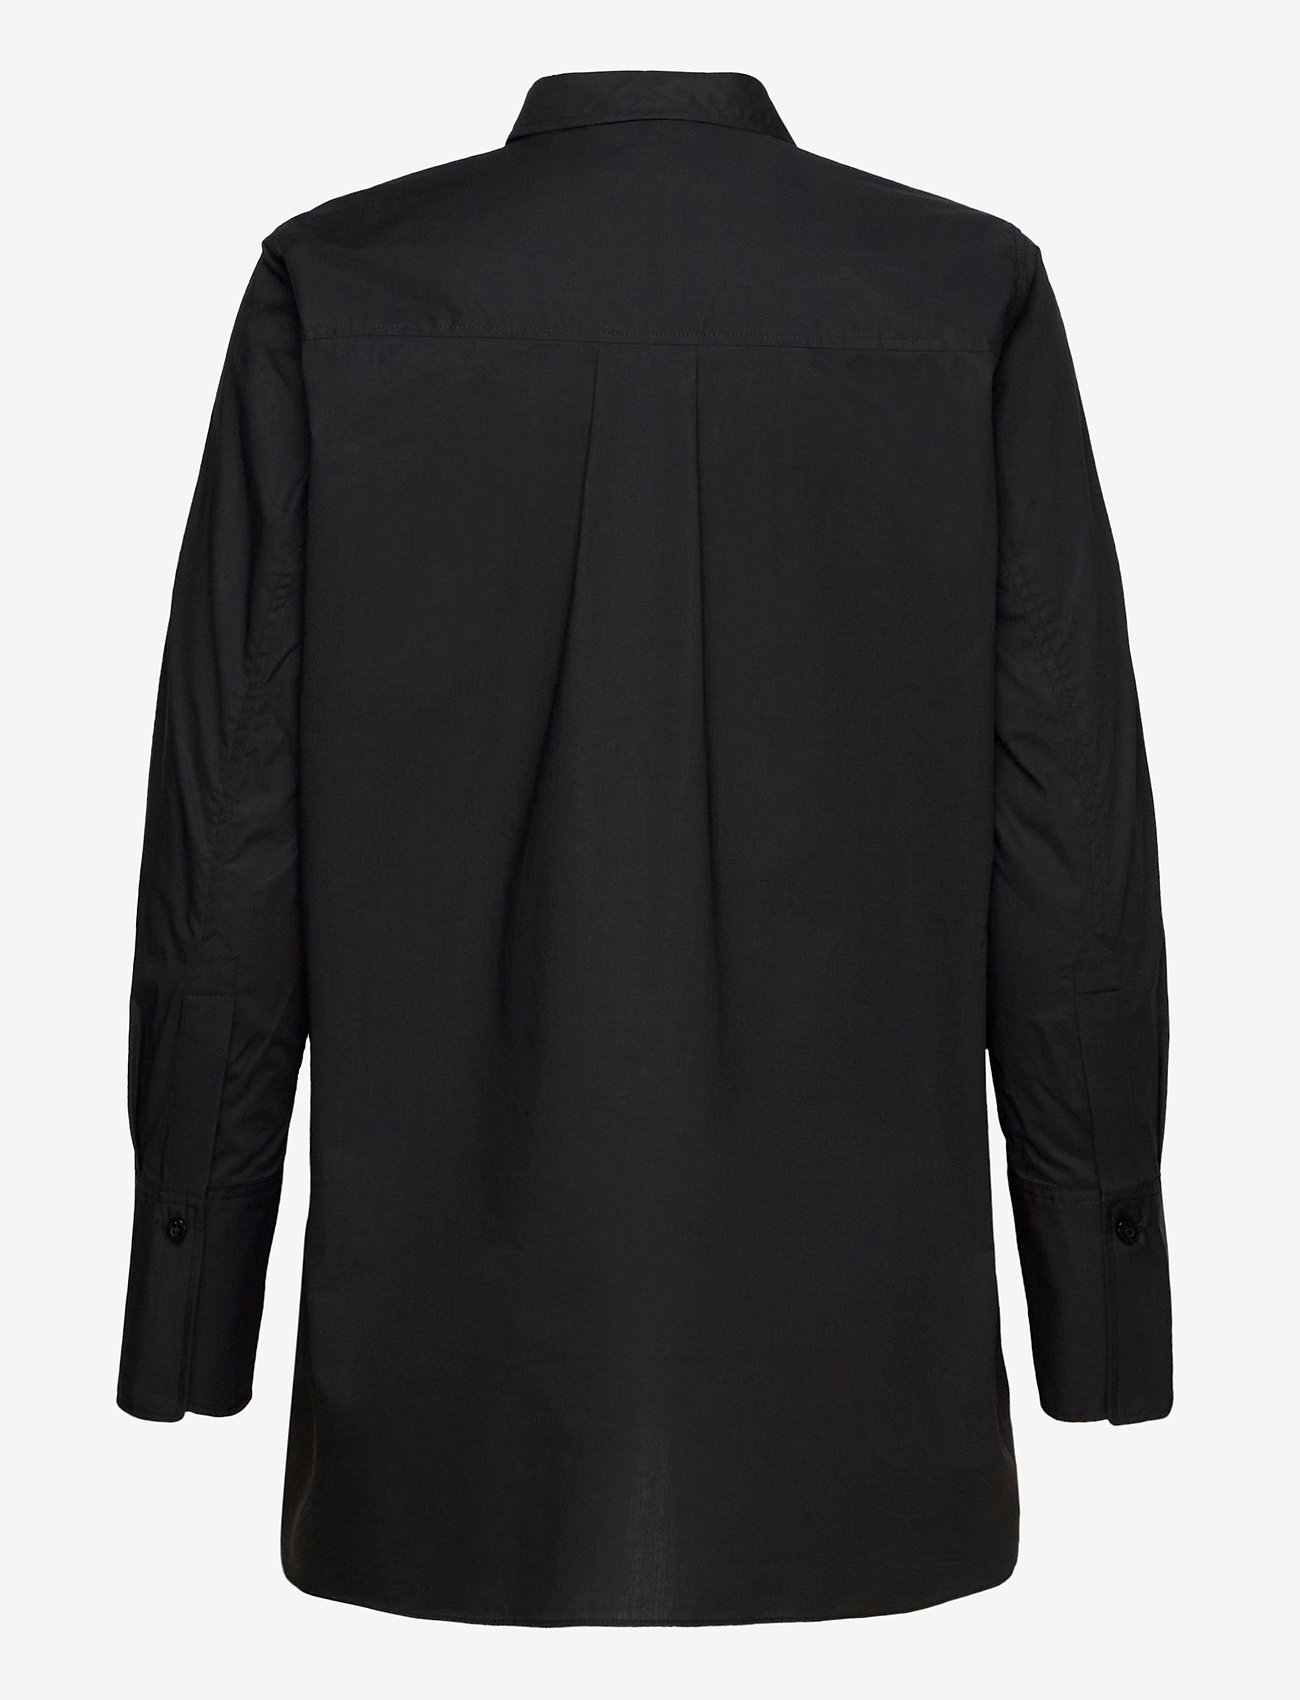 Second Female - Larkin LS Classic Shirt - langärmlige hemden - black - 1